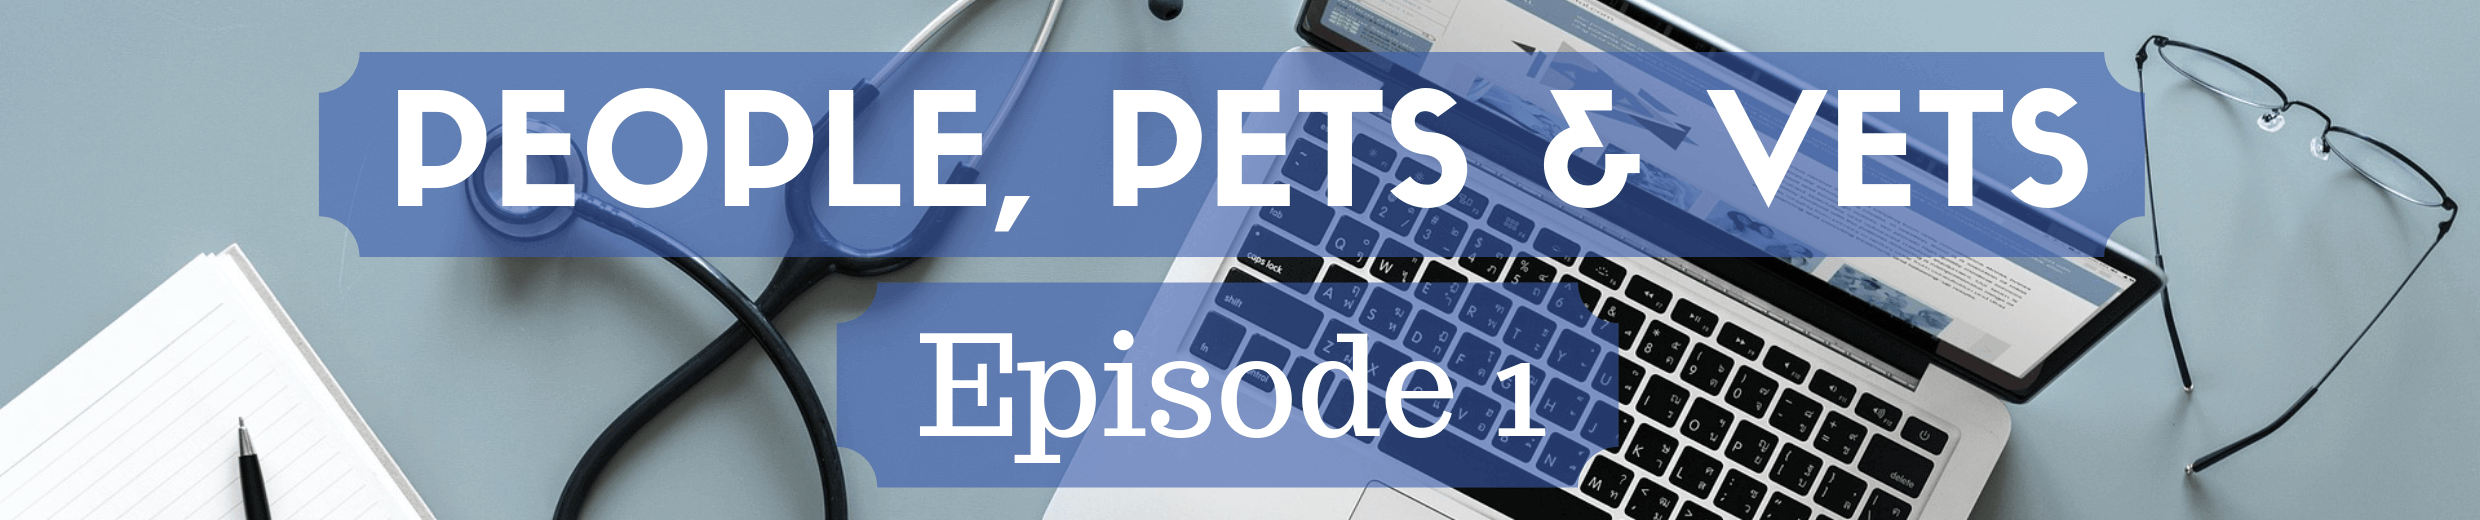 People, Pets & Vets: Episode 1